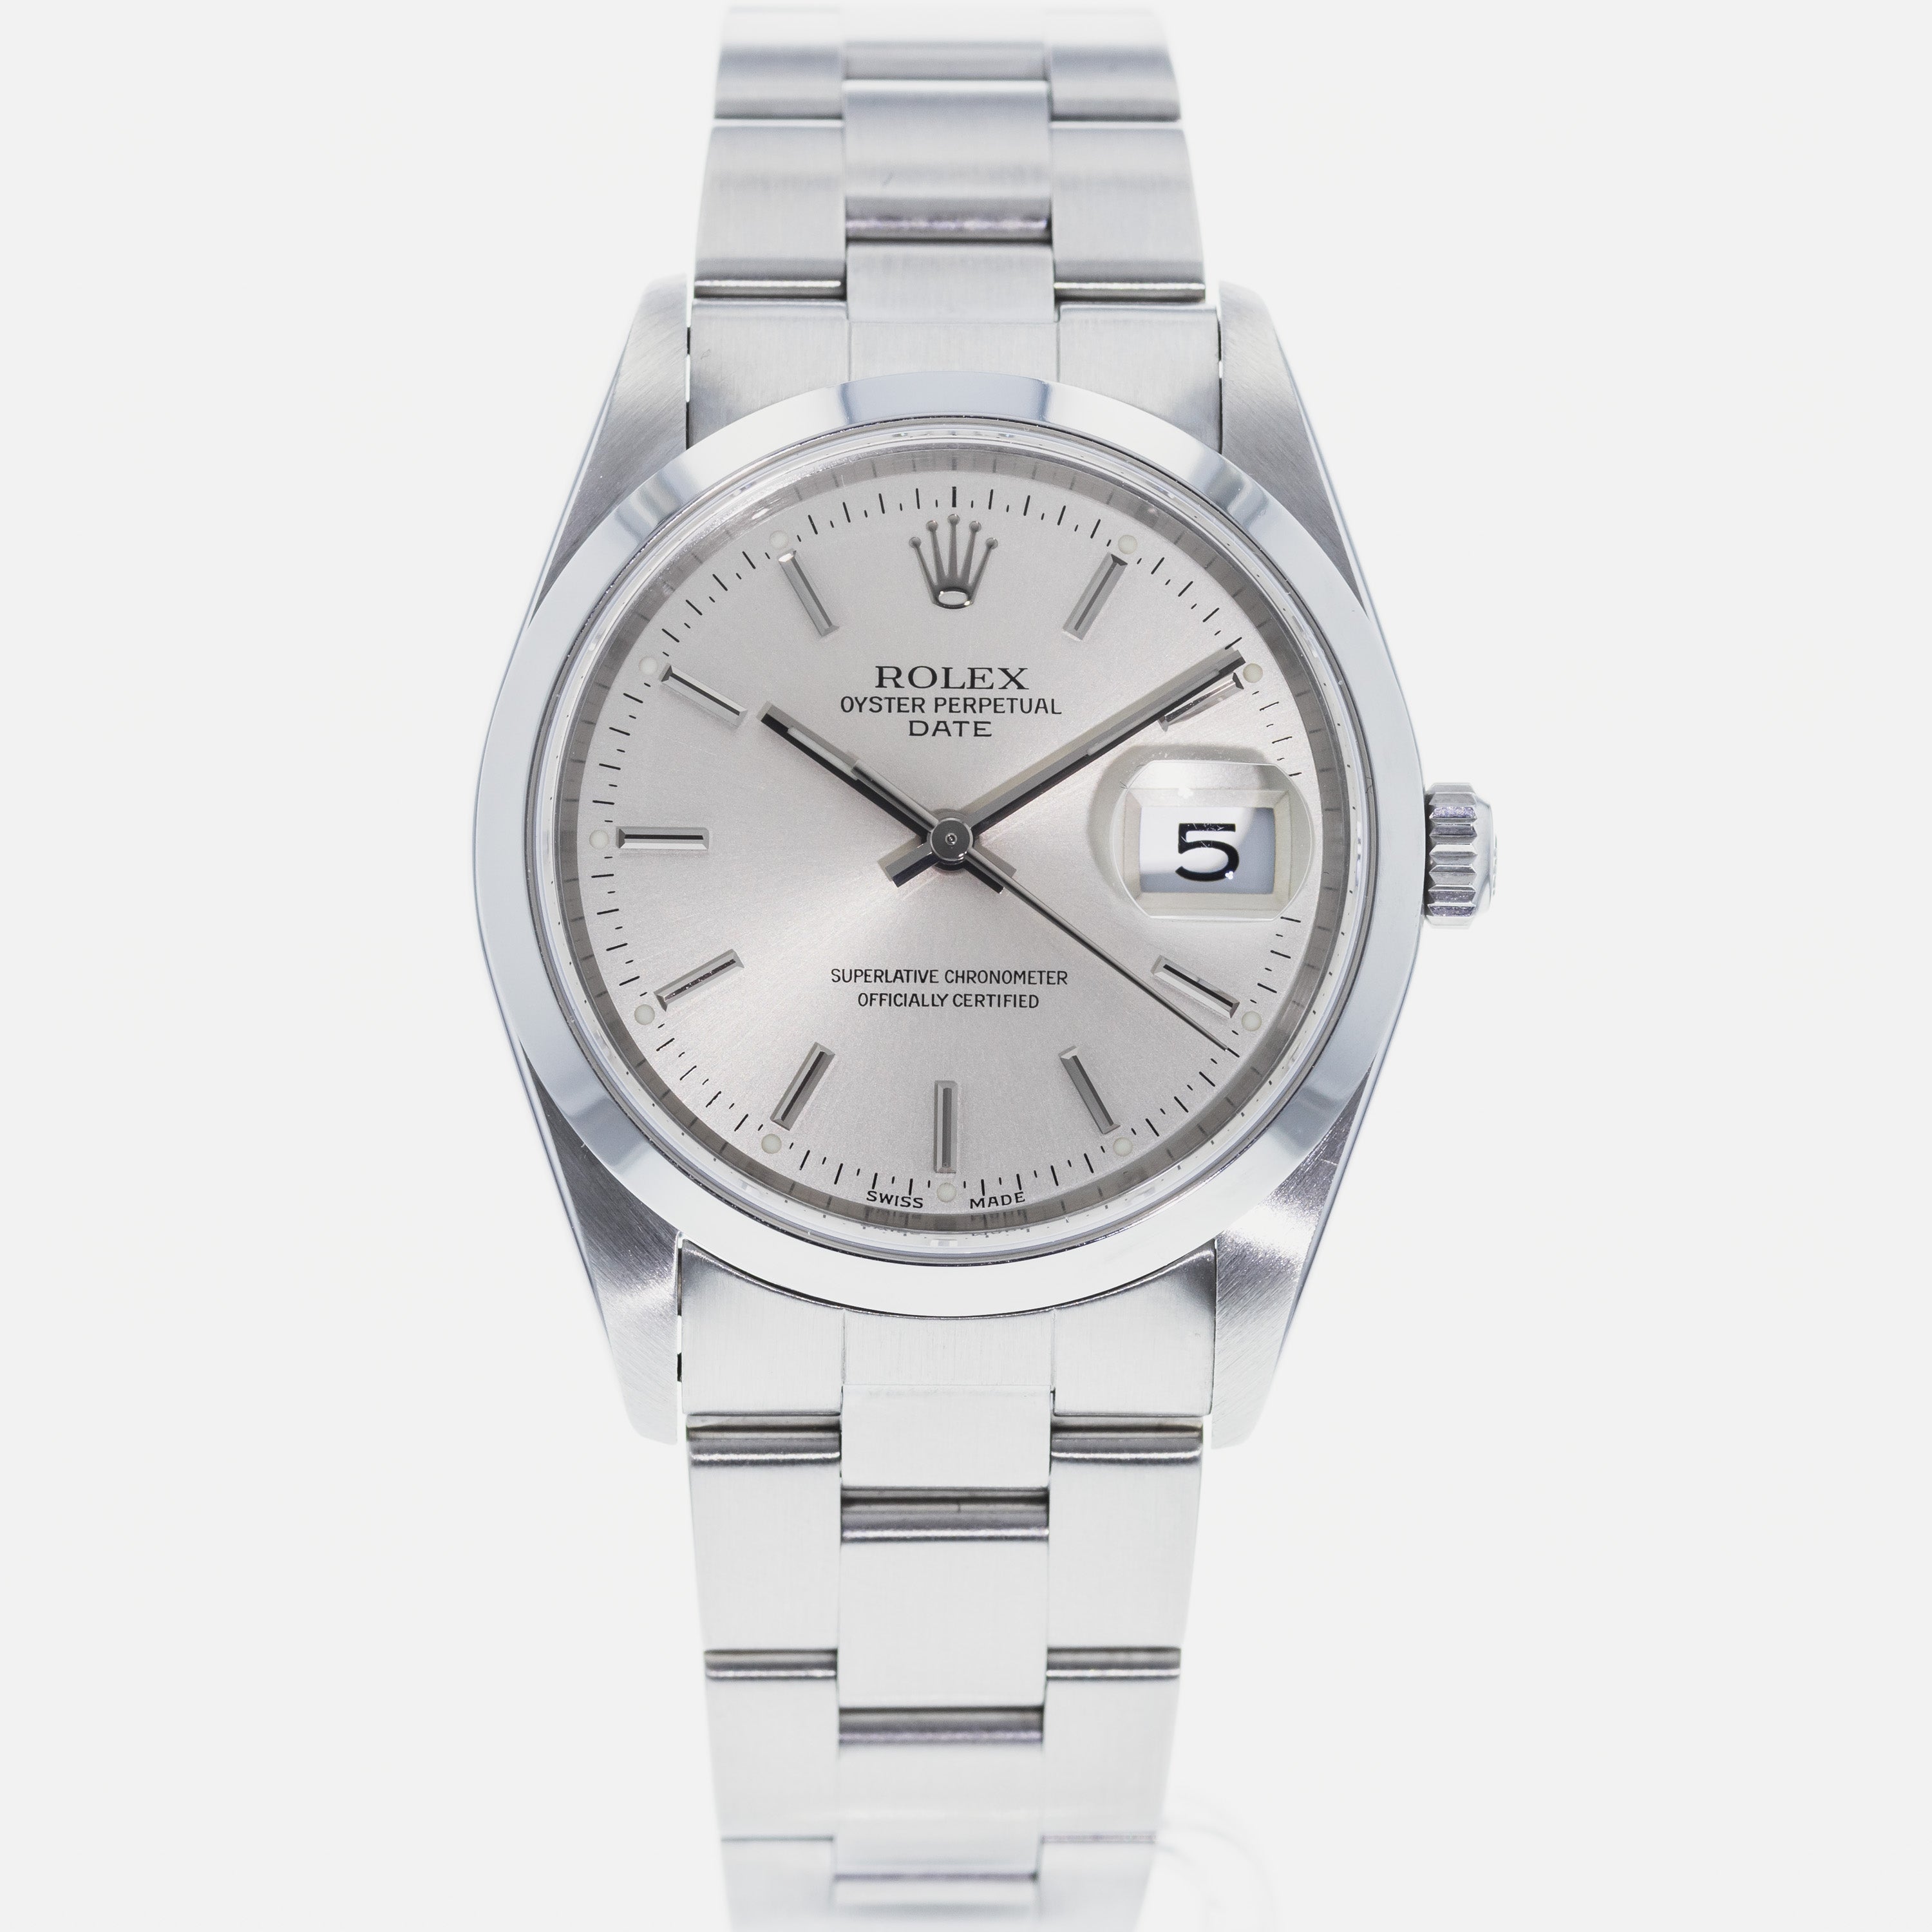 Used Rolex Date 15200 Watch